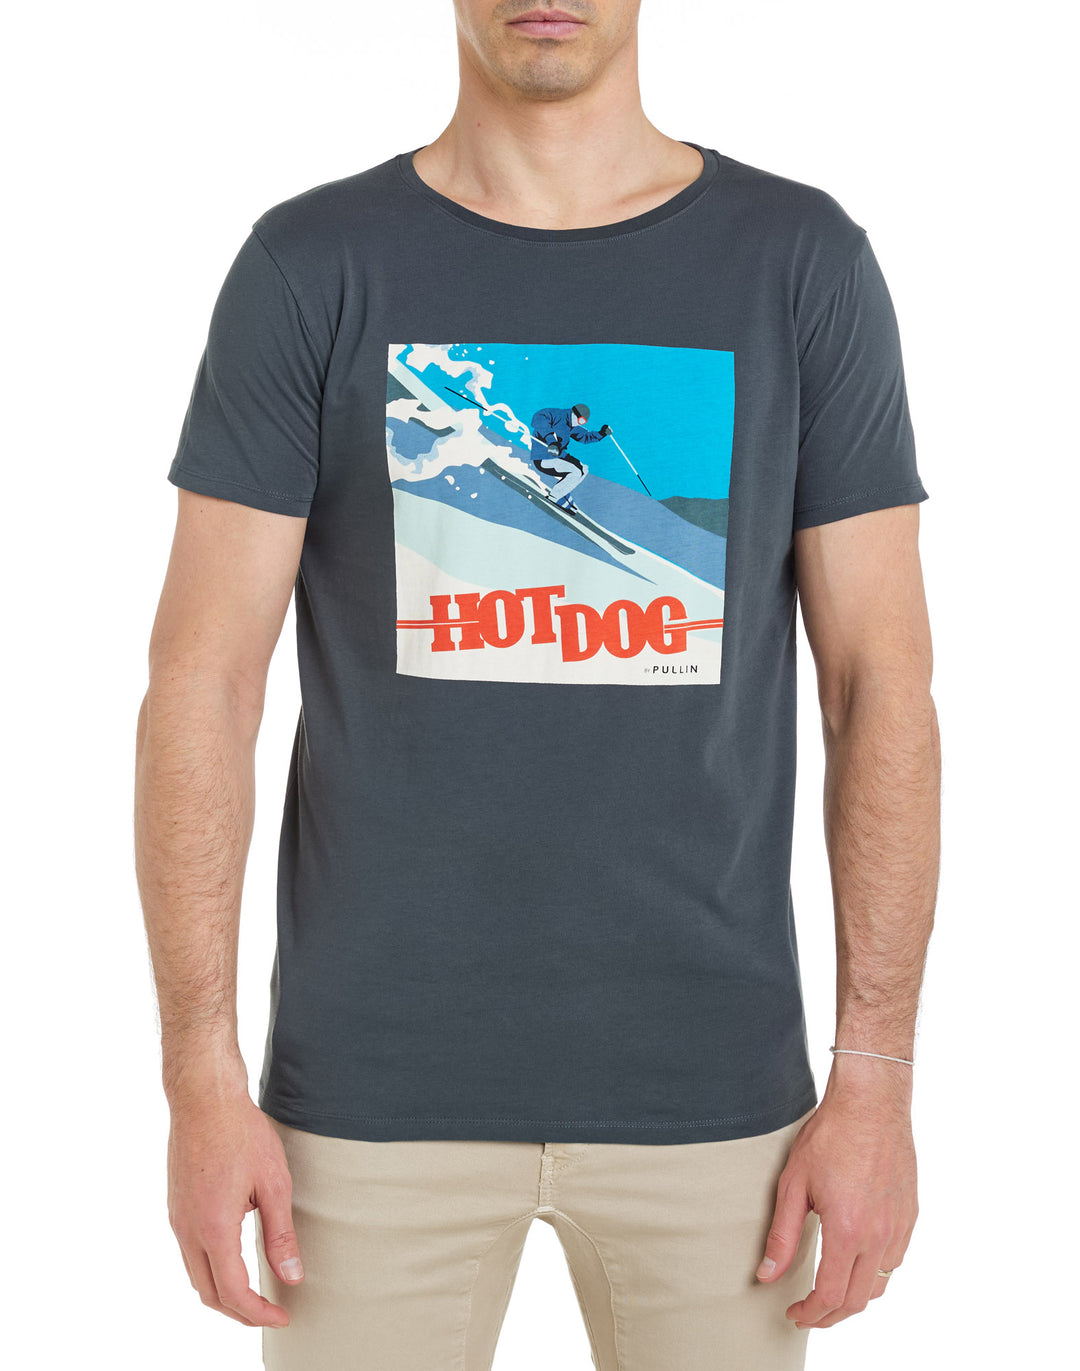 T shirt Hotdog | T shirt